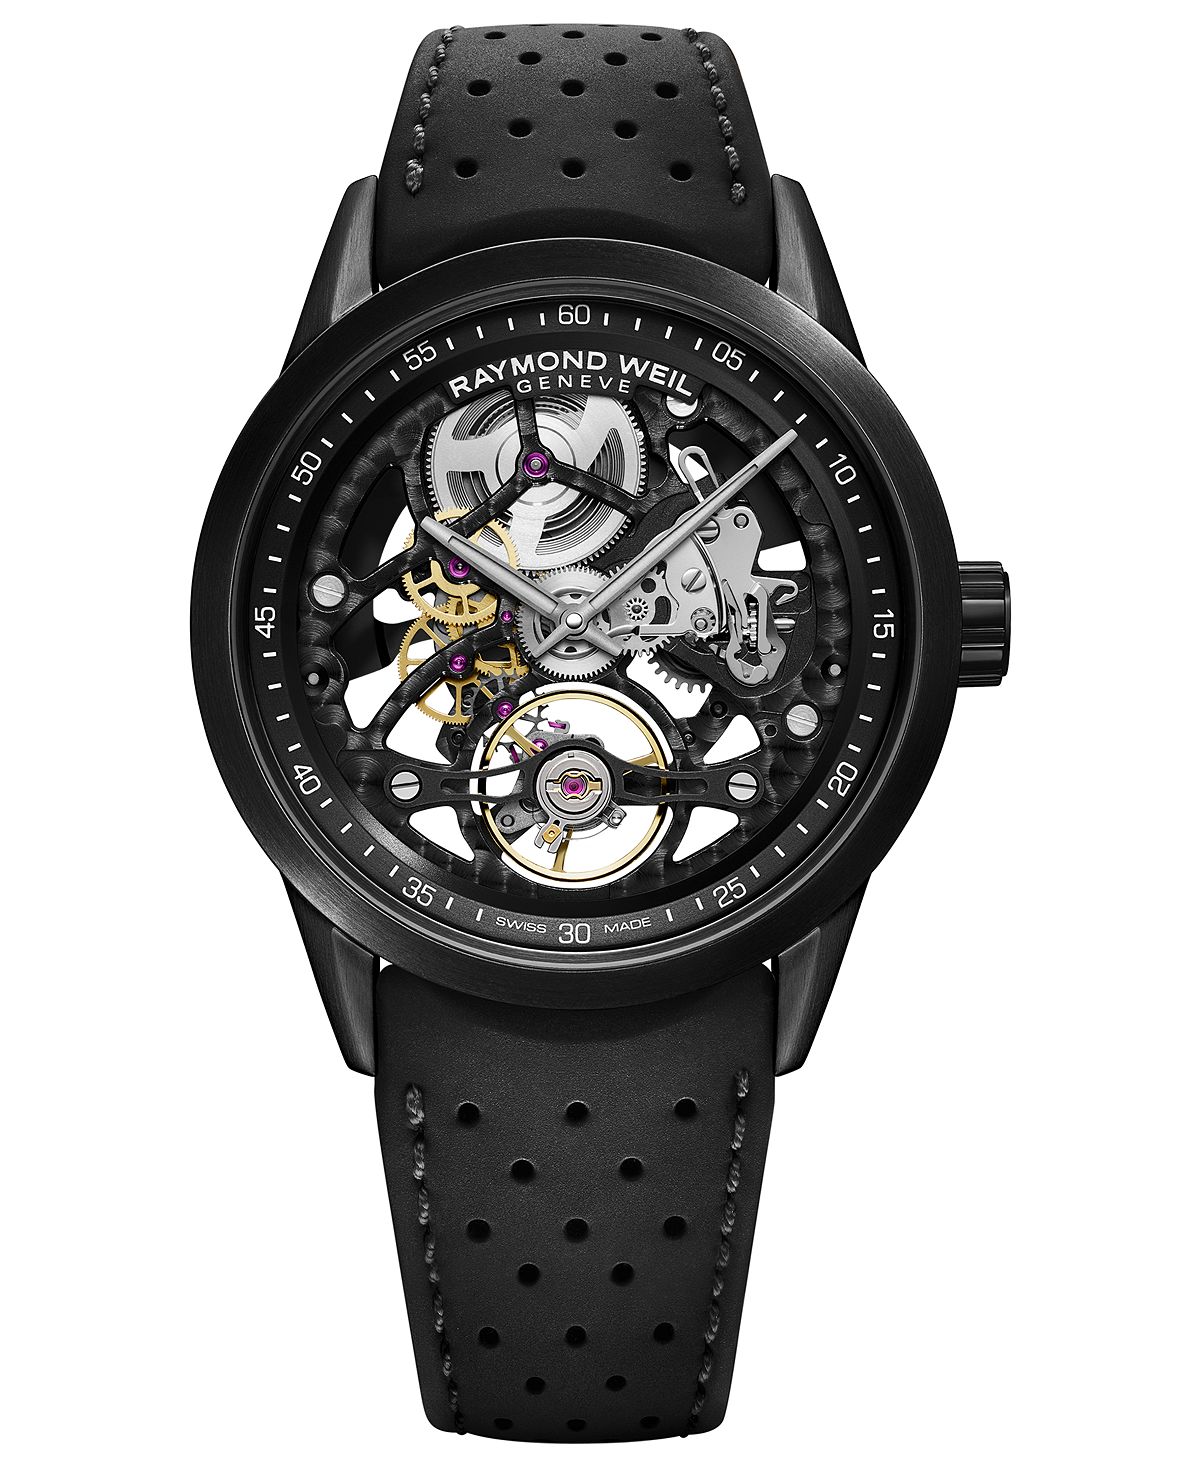 Мужские швейцарские автоматические часы Freelancer с черным перфорированным каучуковым ремешком, 42 мм Raymond Weil часы скелетон freelancer 42 мм raymond weil цвет gray